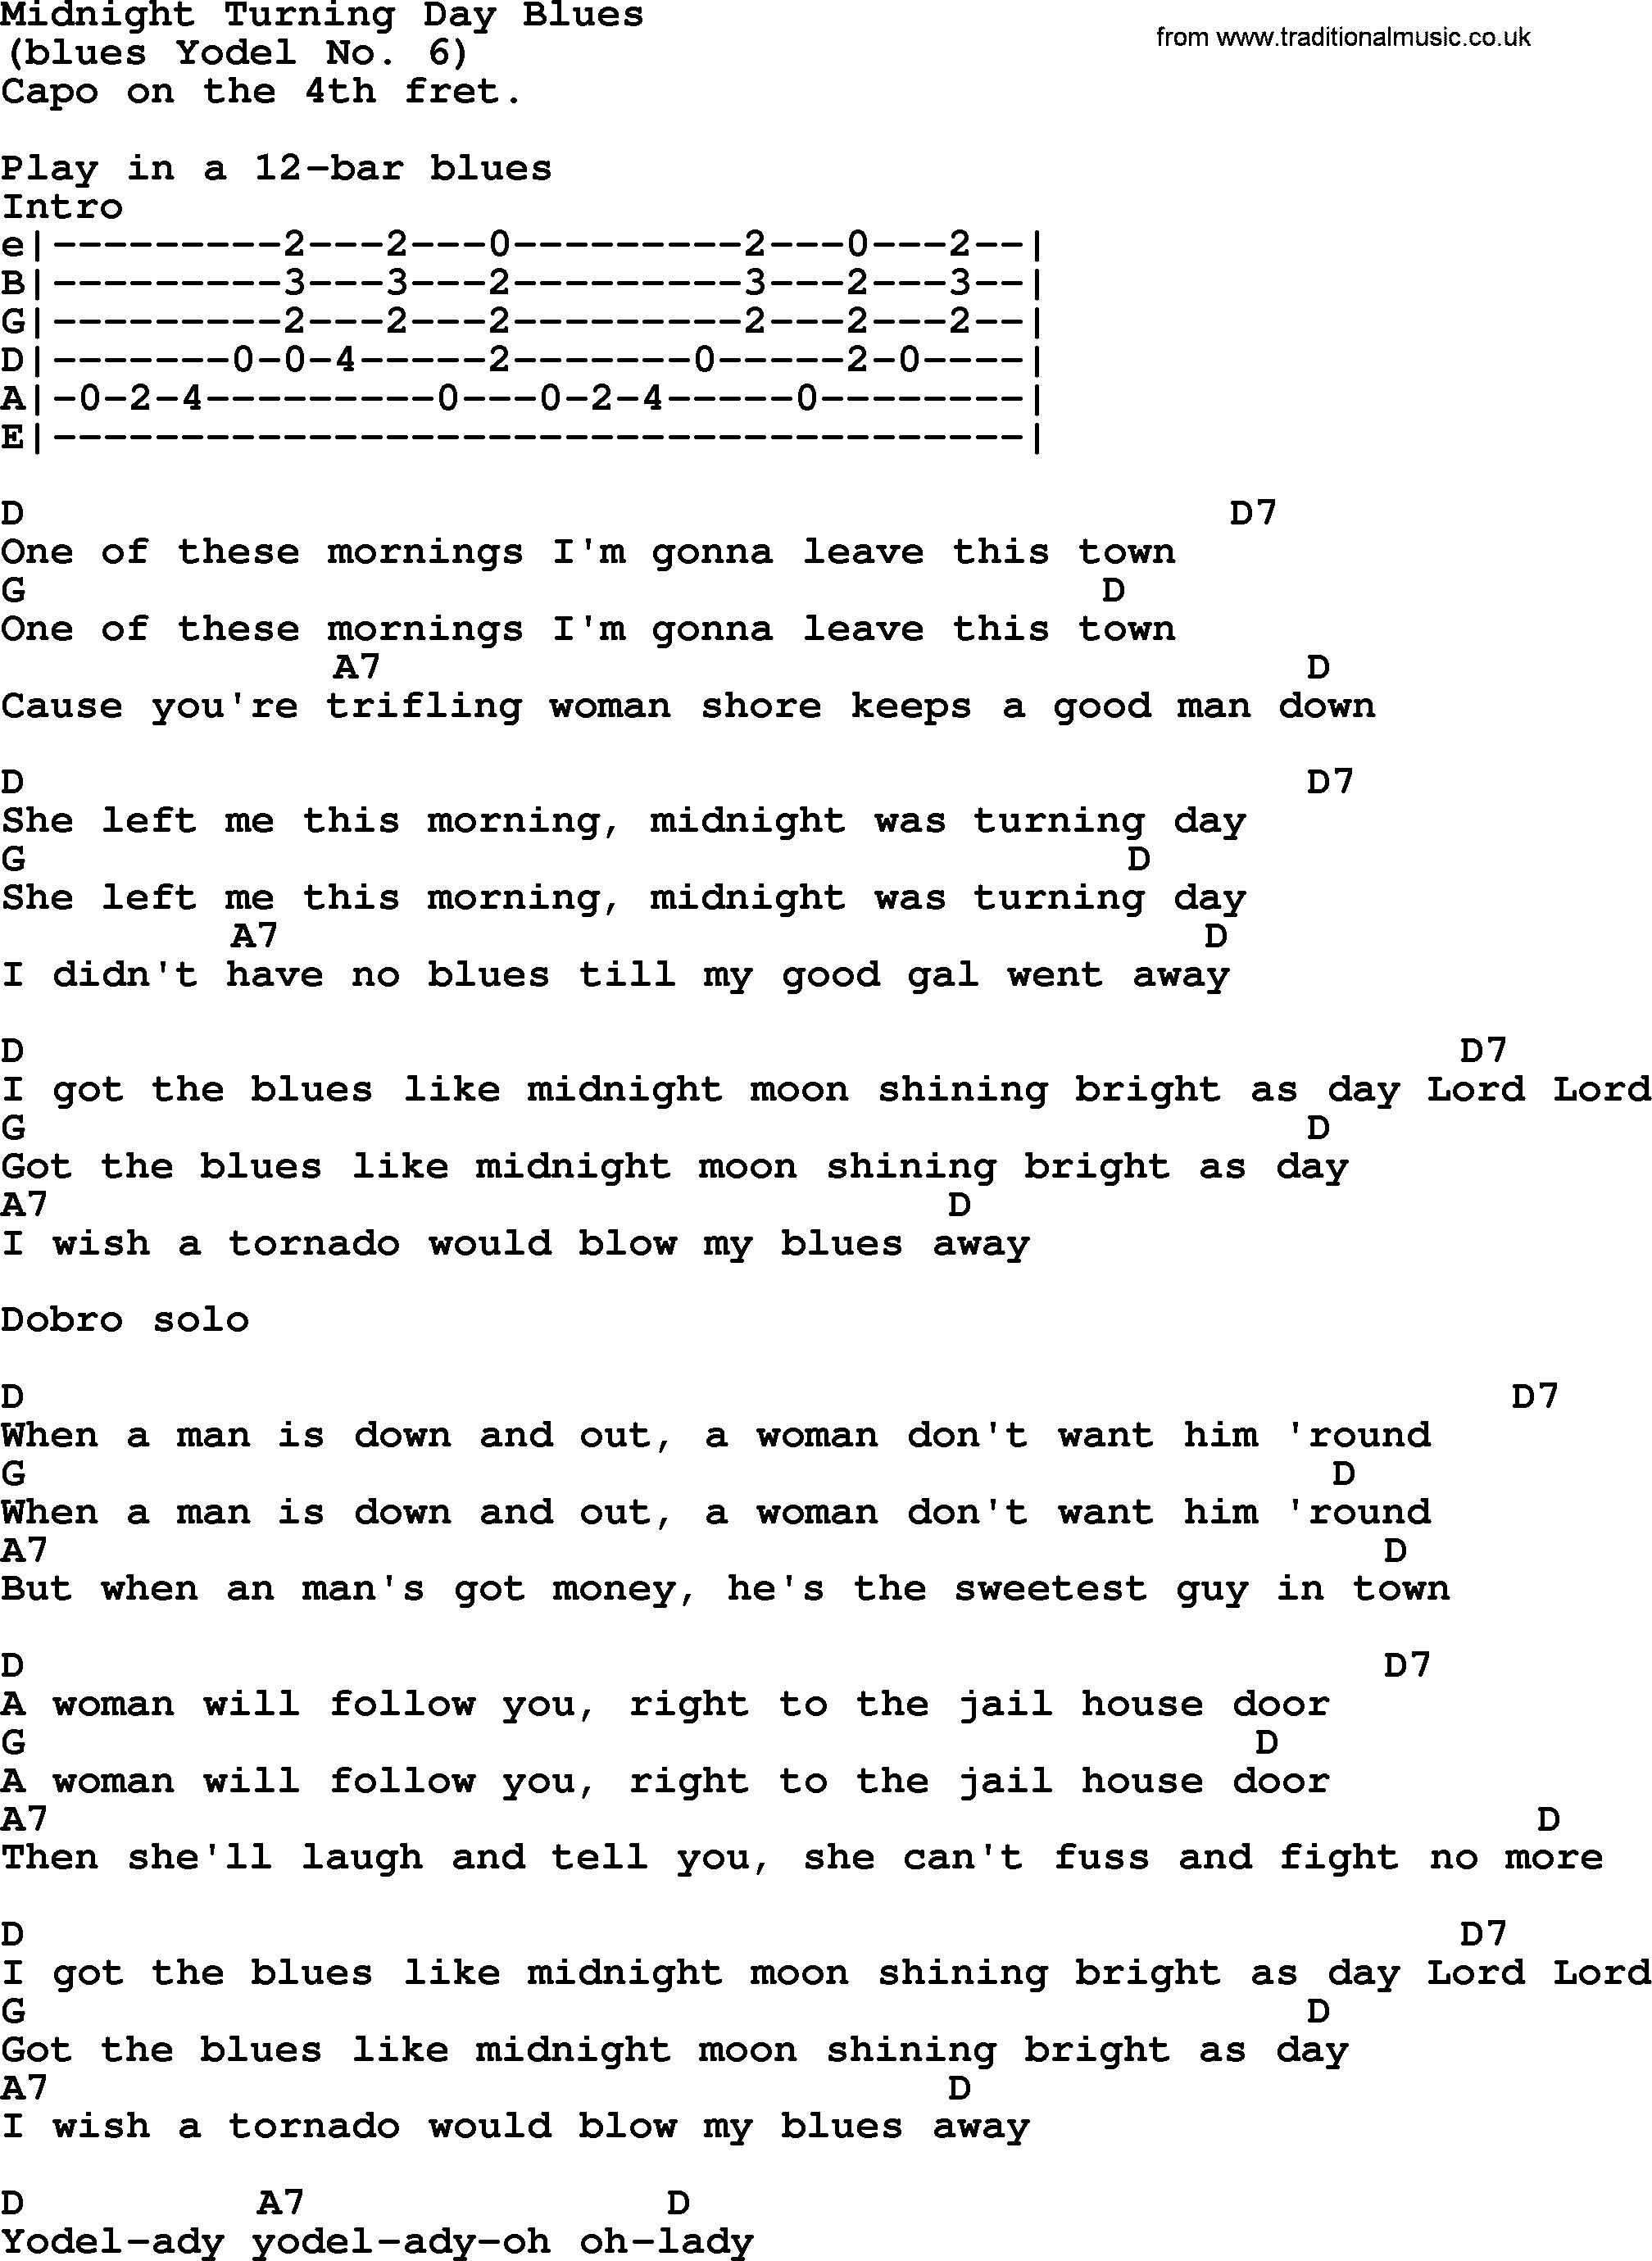 Merle Haggard song: Midnight Turning Day Blues, lyrics and chords